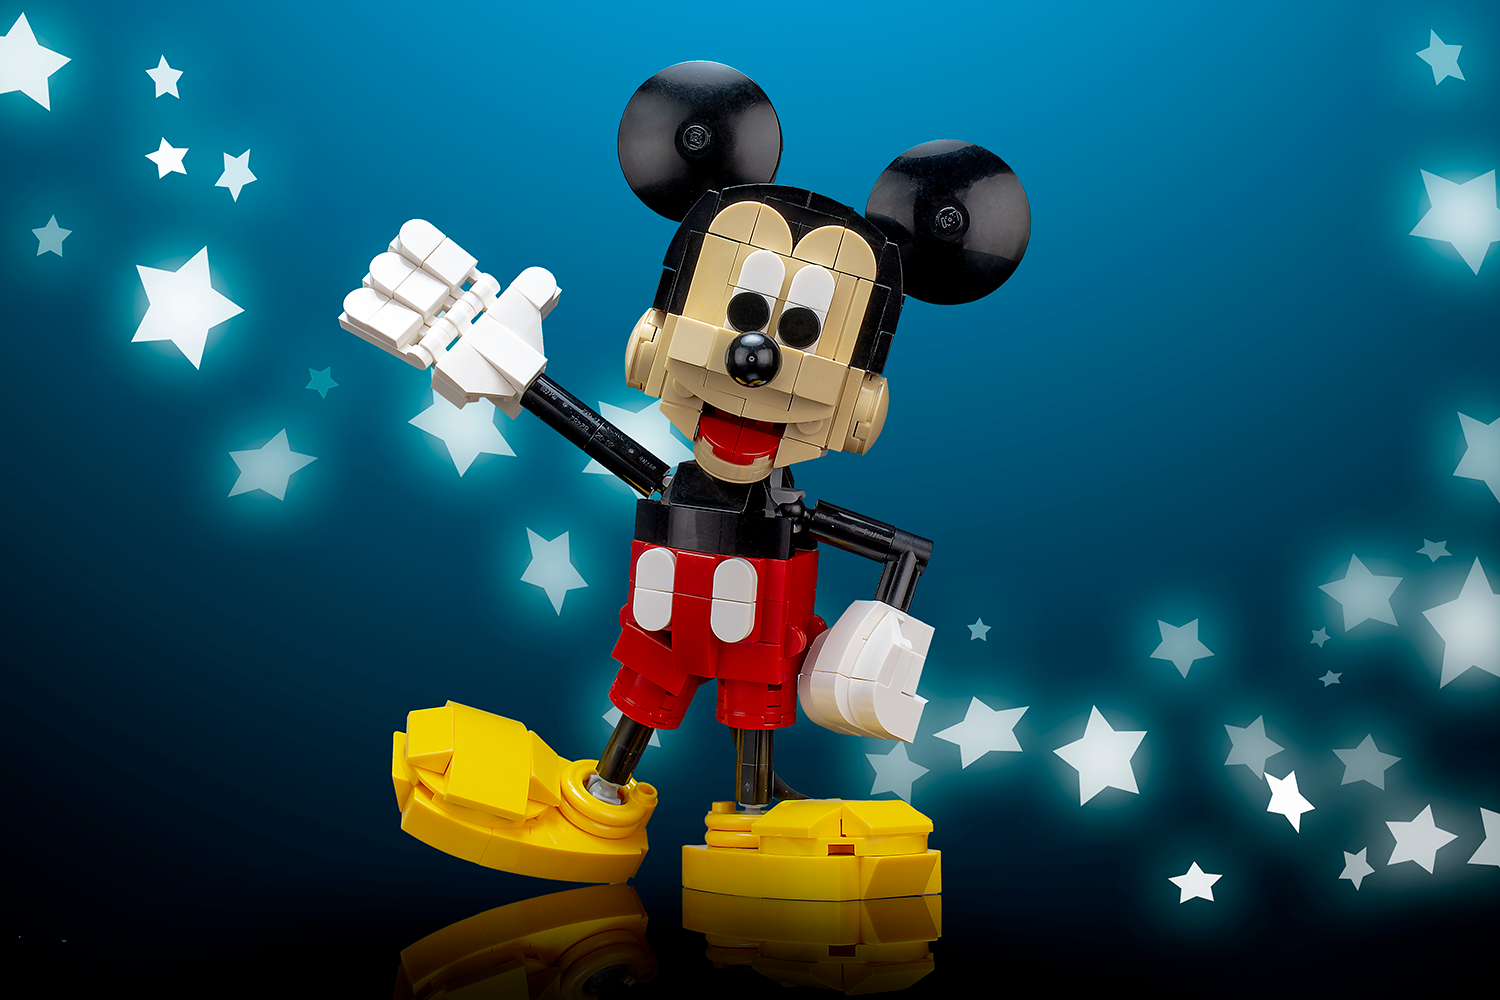 The Magical Mouse MOC made using LEGO bricks